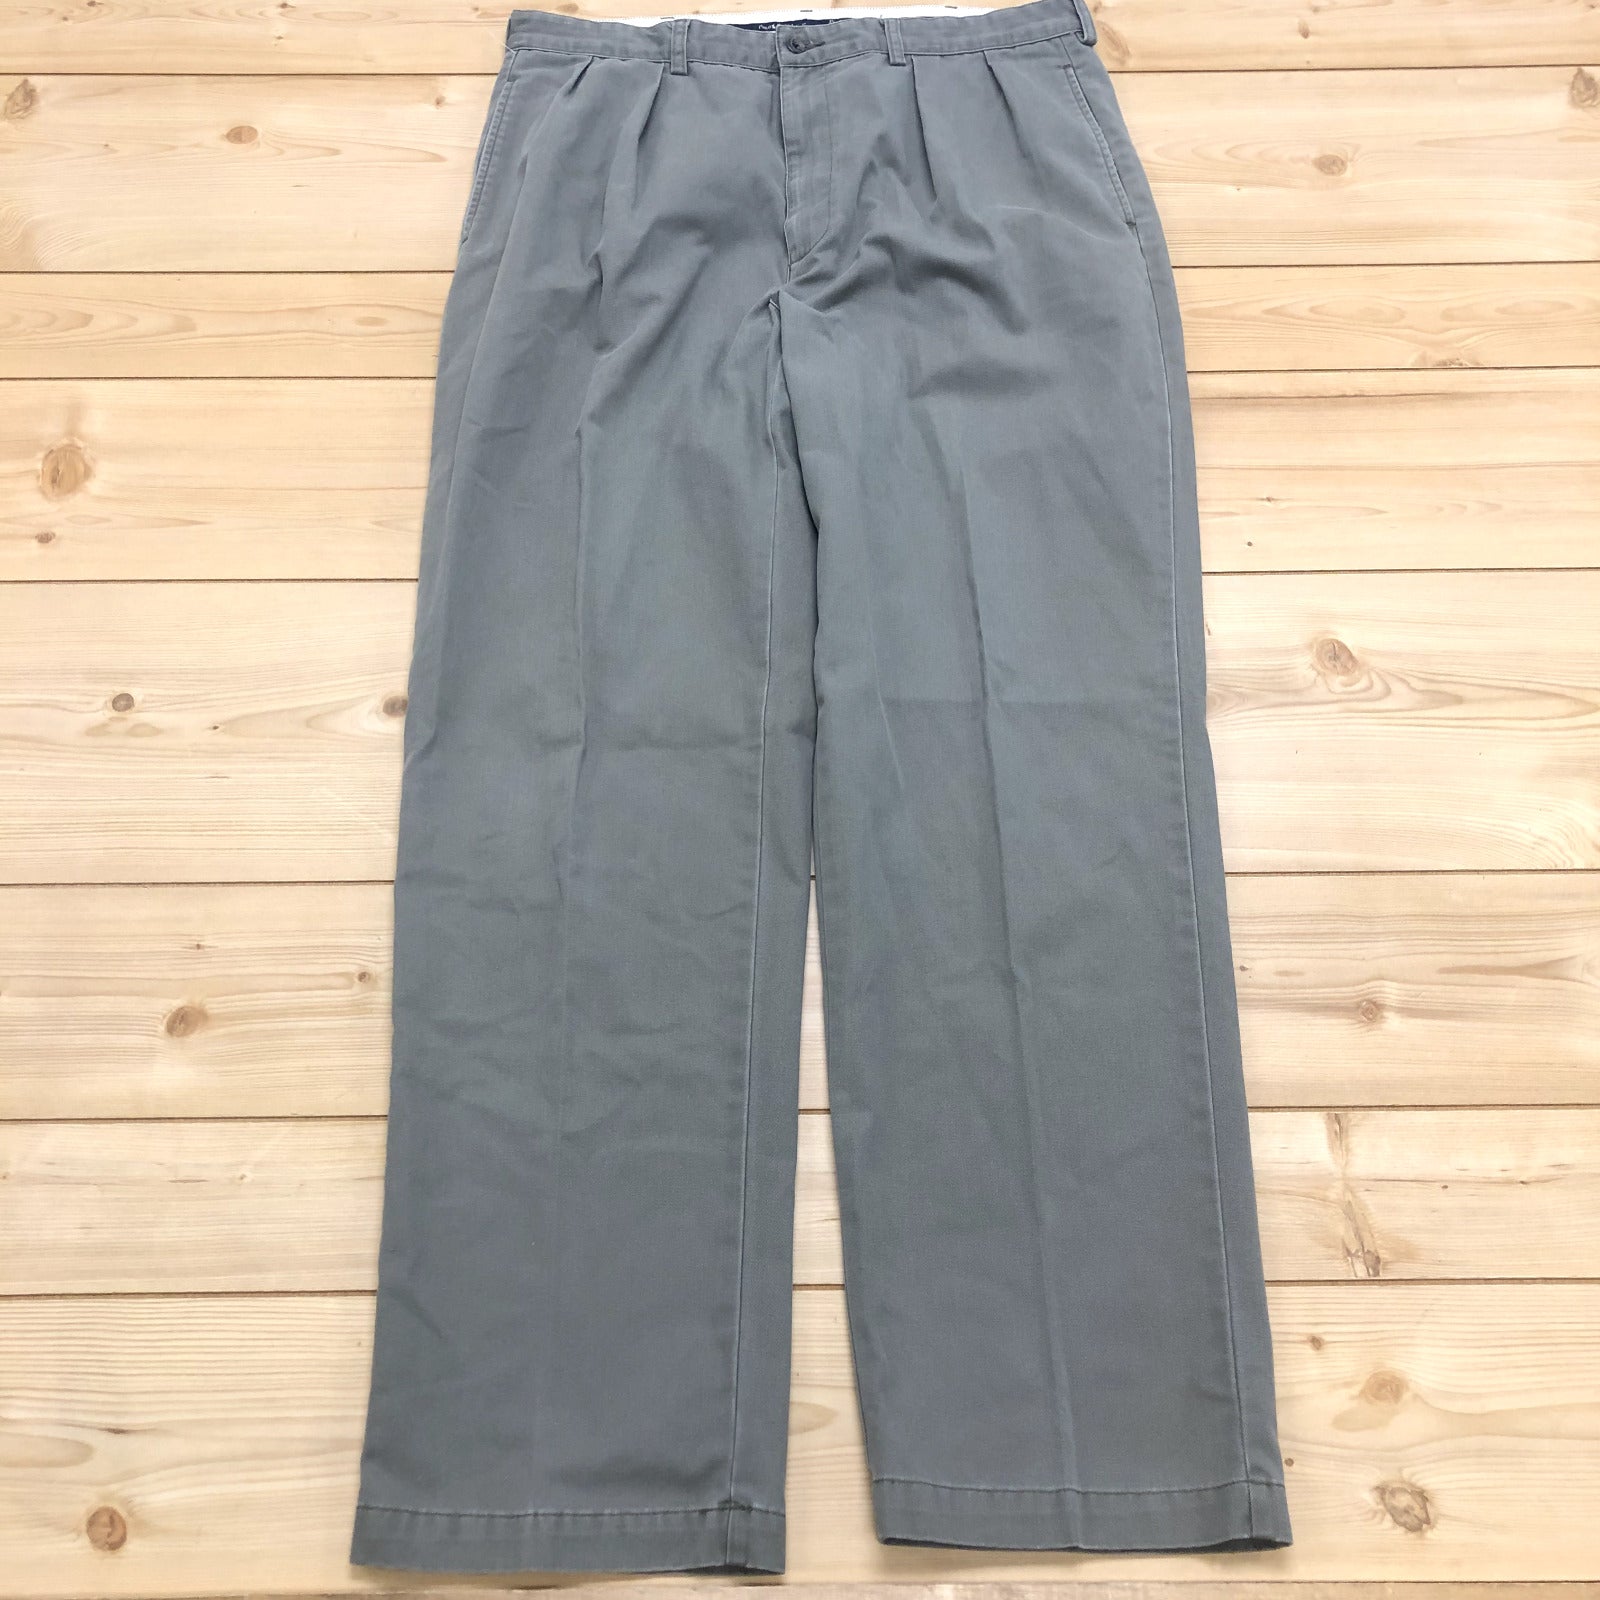 Ralph Lauren Polo Grey Khaki Pocket Pleated Front Chino Pants Men Size 38W x 34L